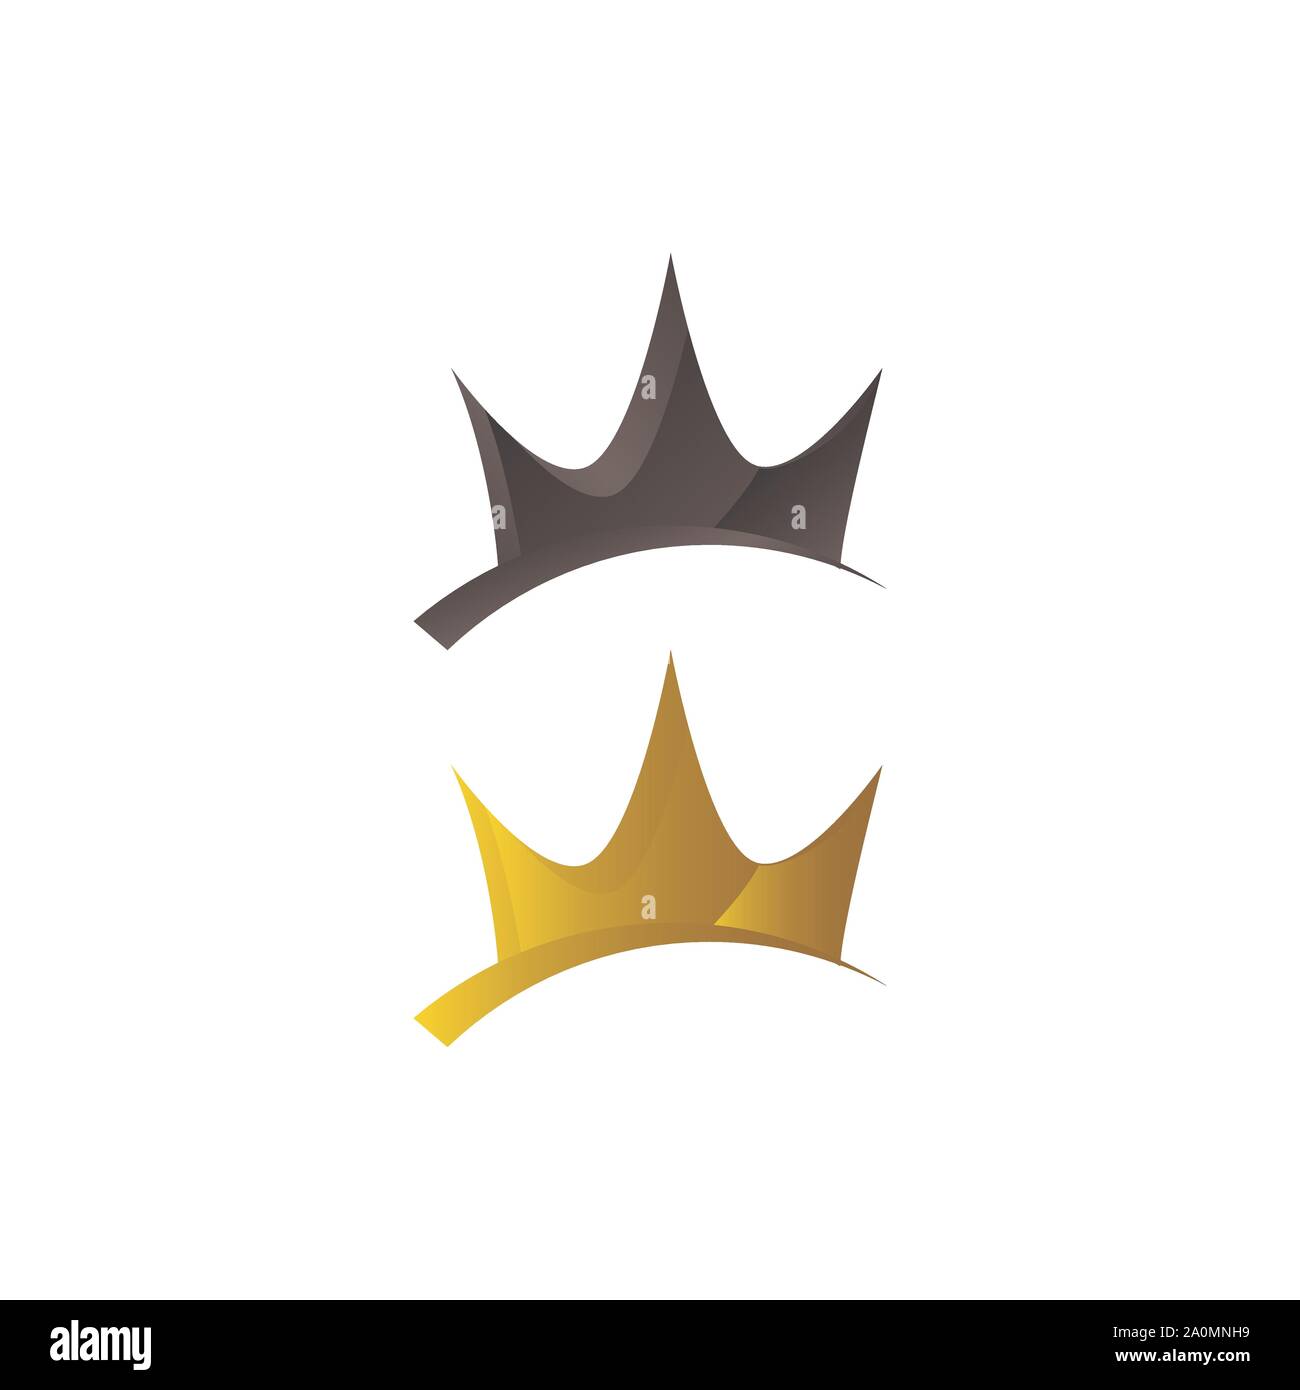 Gold Luxury Crown Logo Vector Royal King Queen Abstract Design